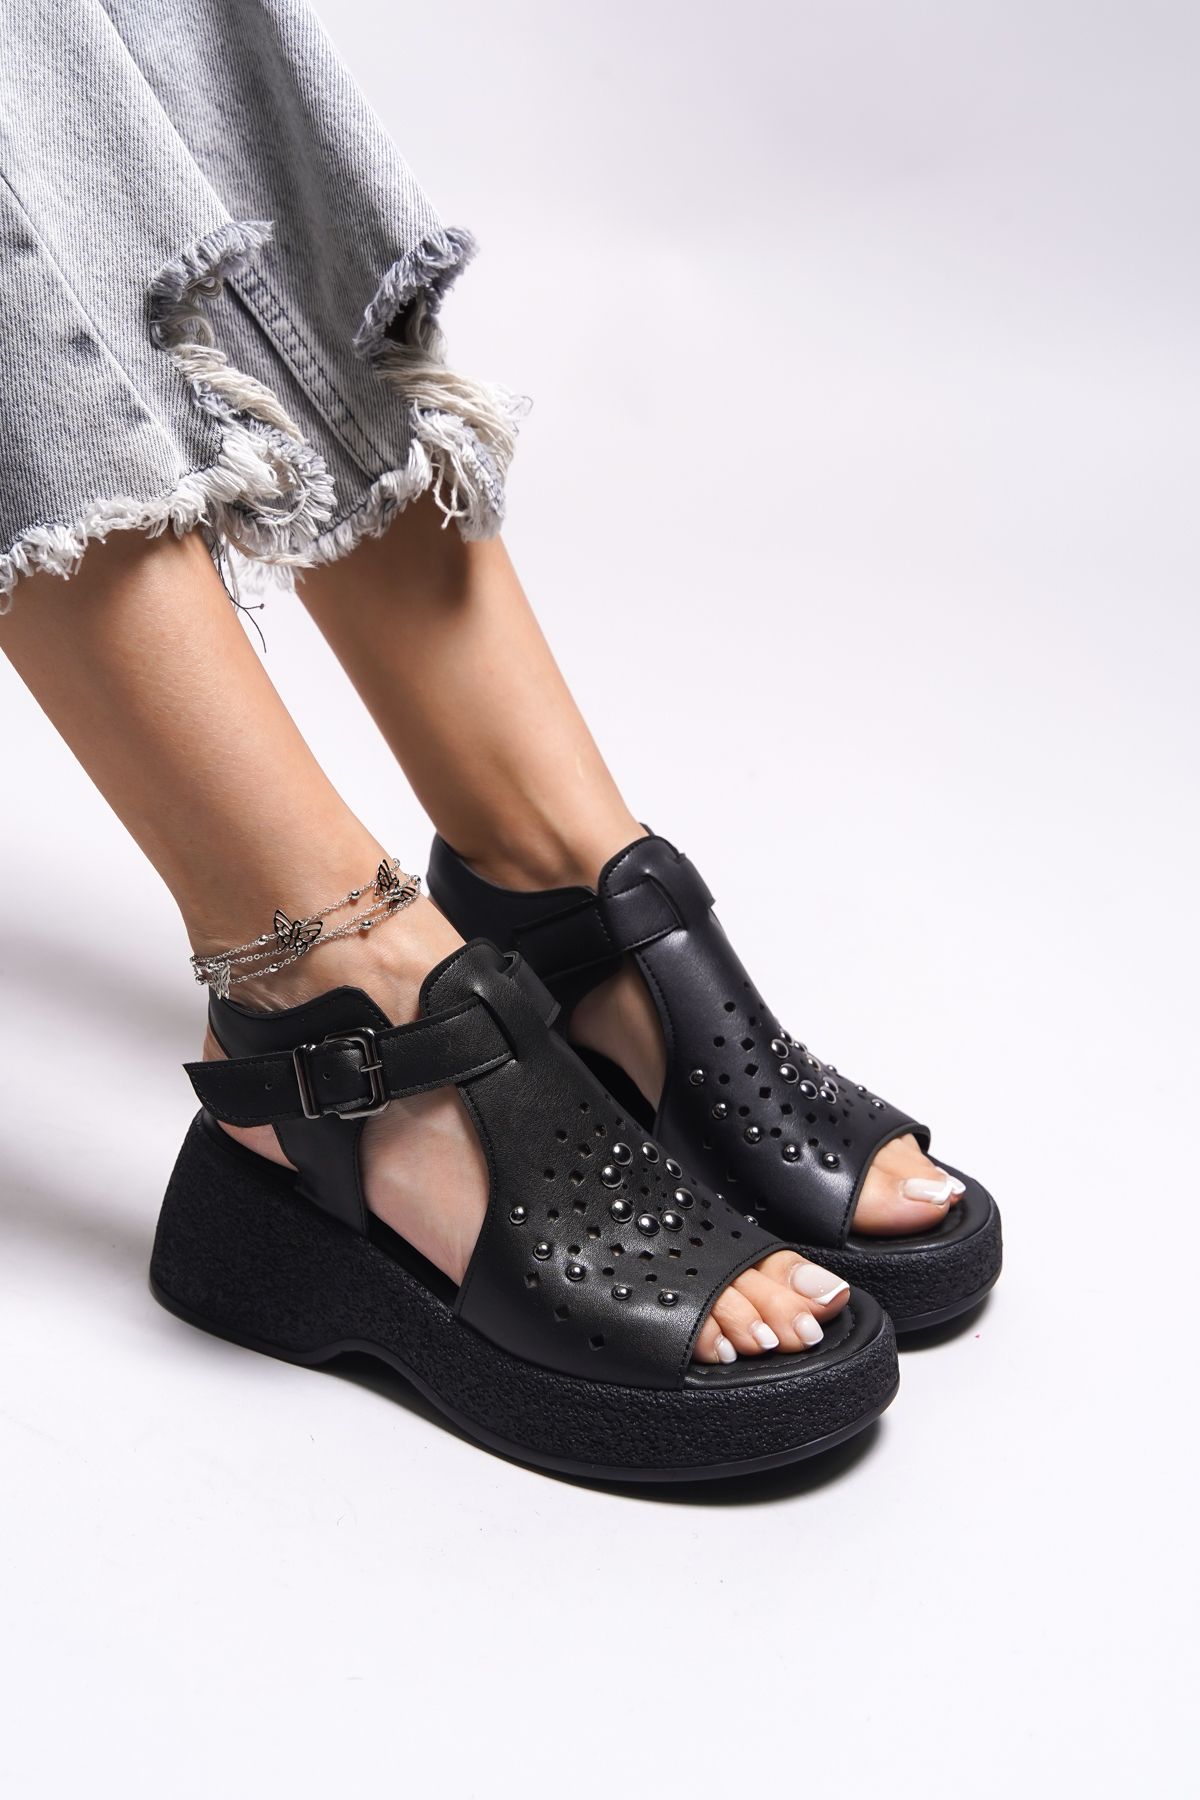 Riccon Jaidorei Kadın Topuklu Sandalet 0012416 Siyah